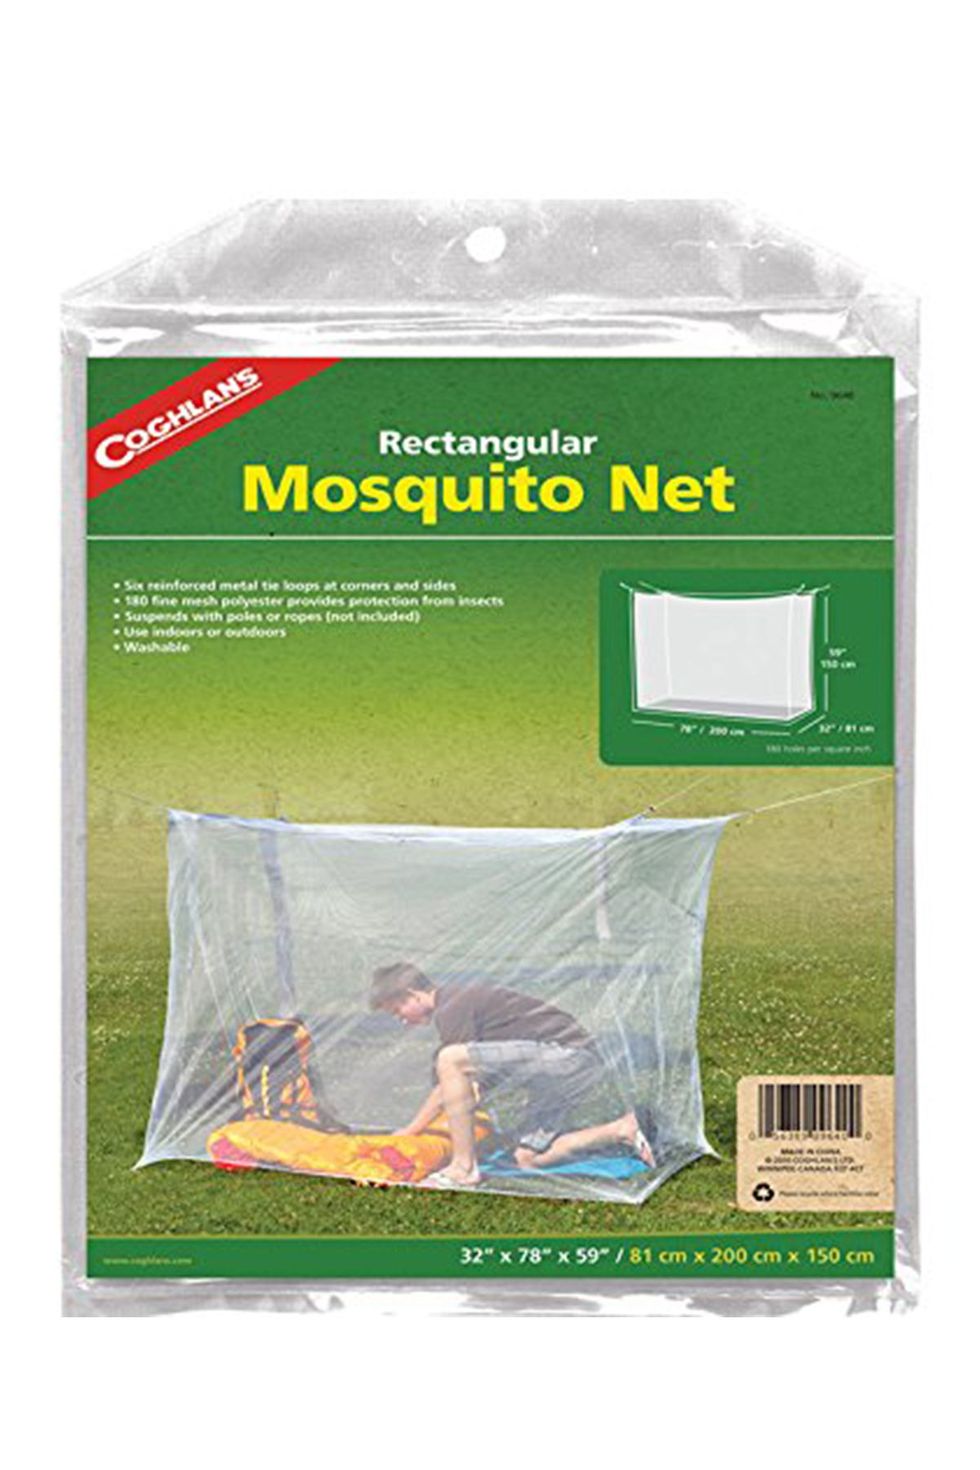 Sleep under a mosquito net.